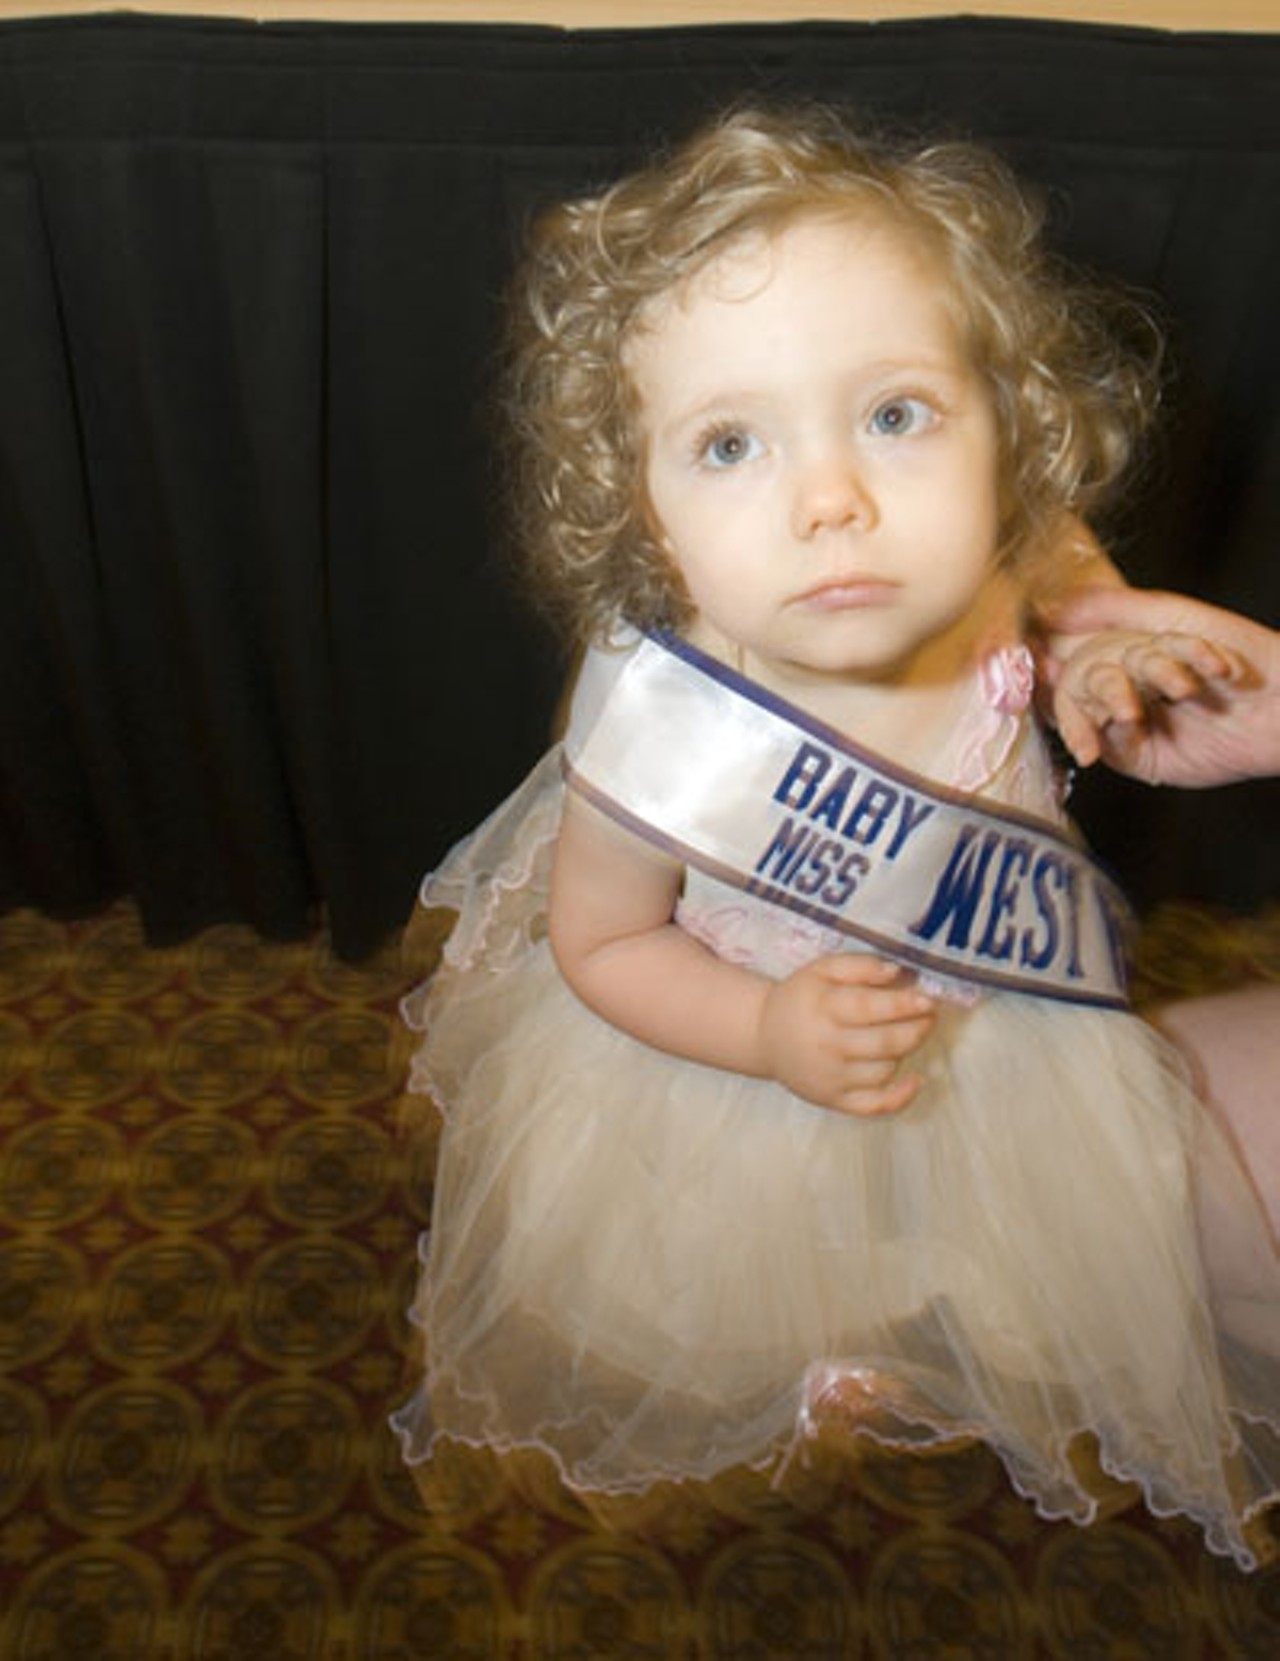 Brittany Turner, Baby Miss West Virginia.